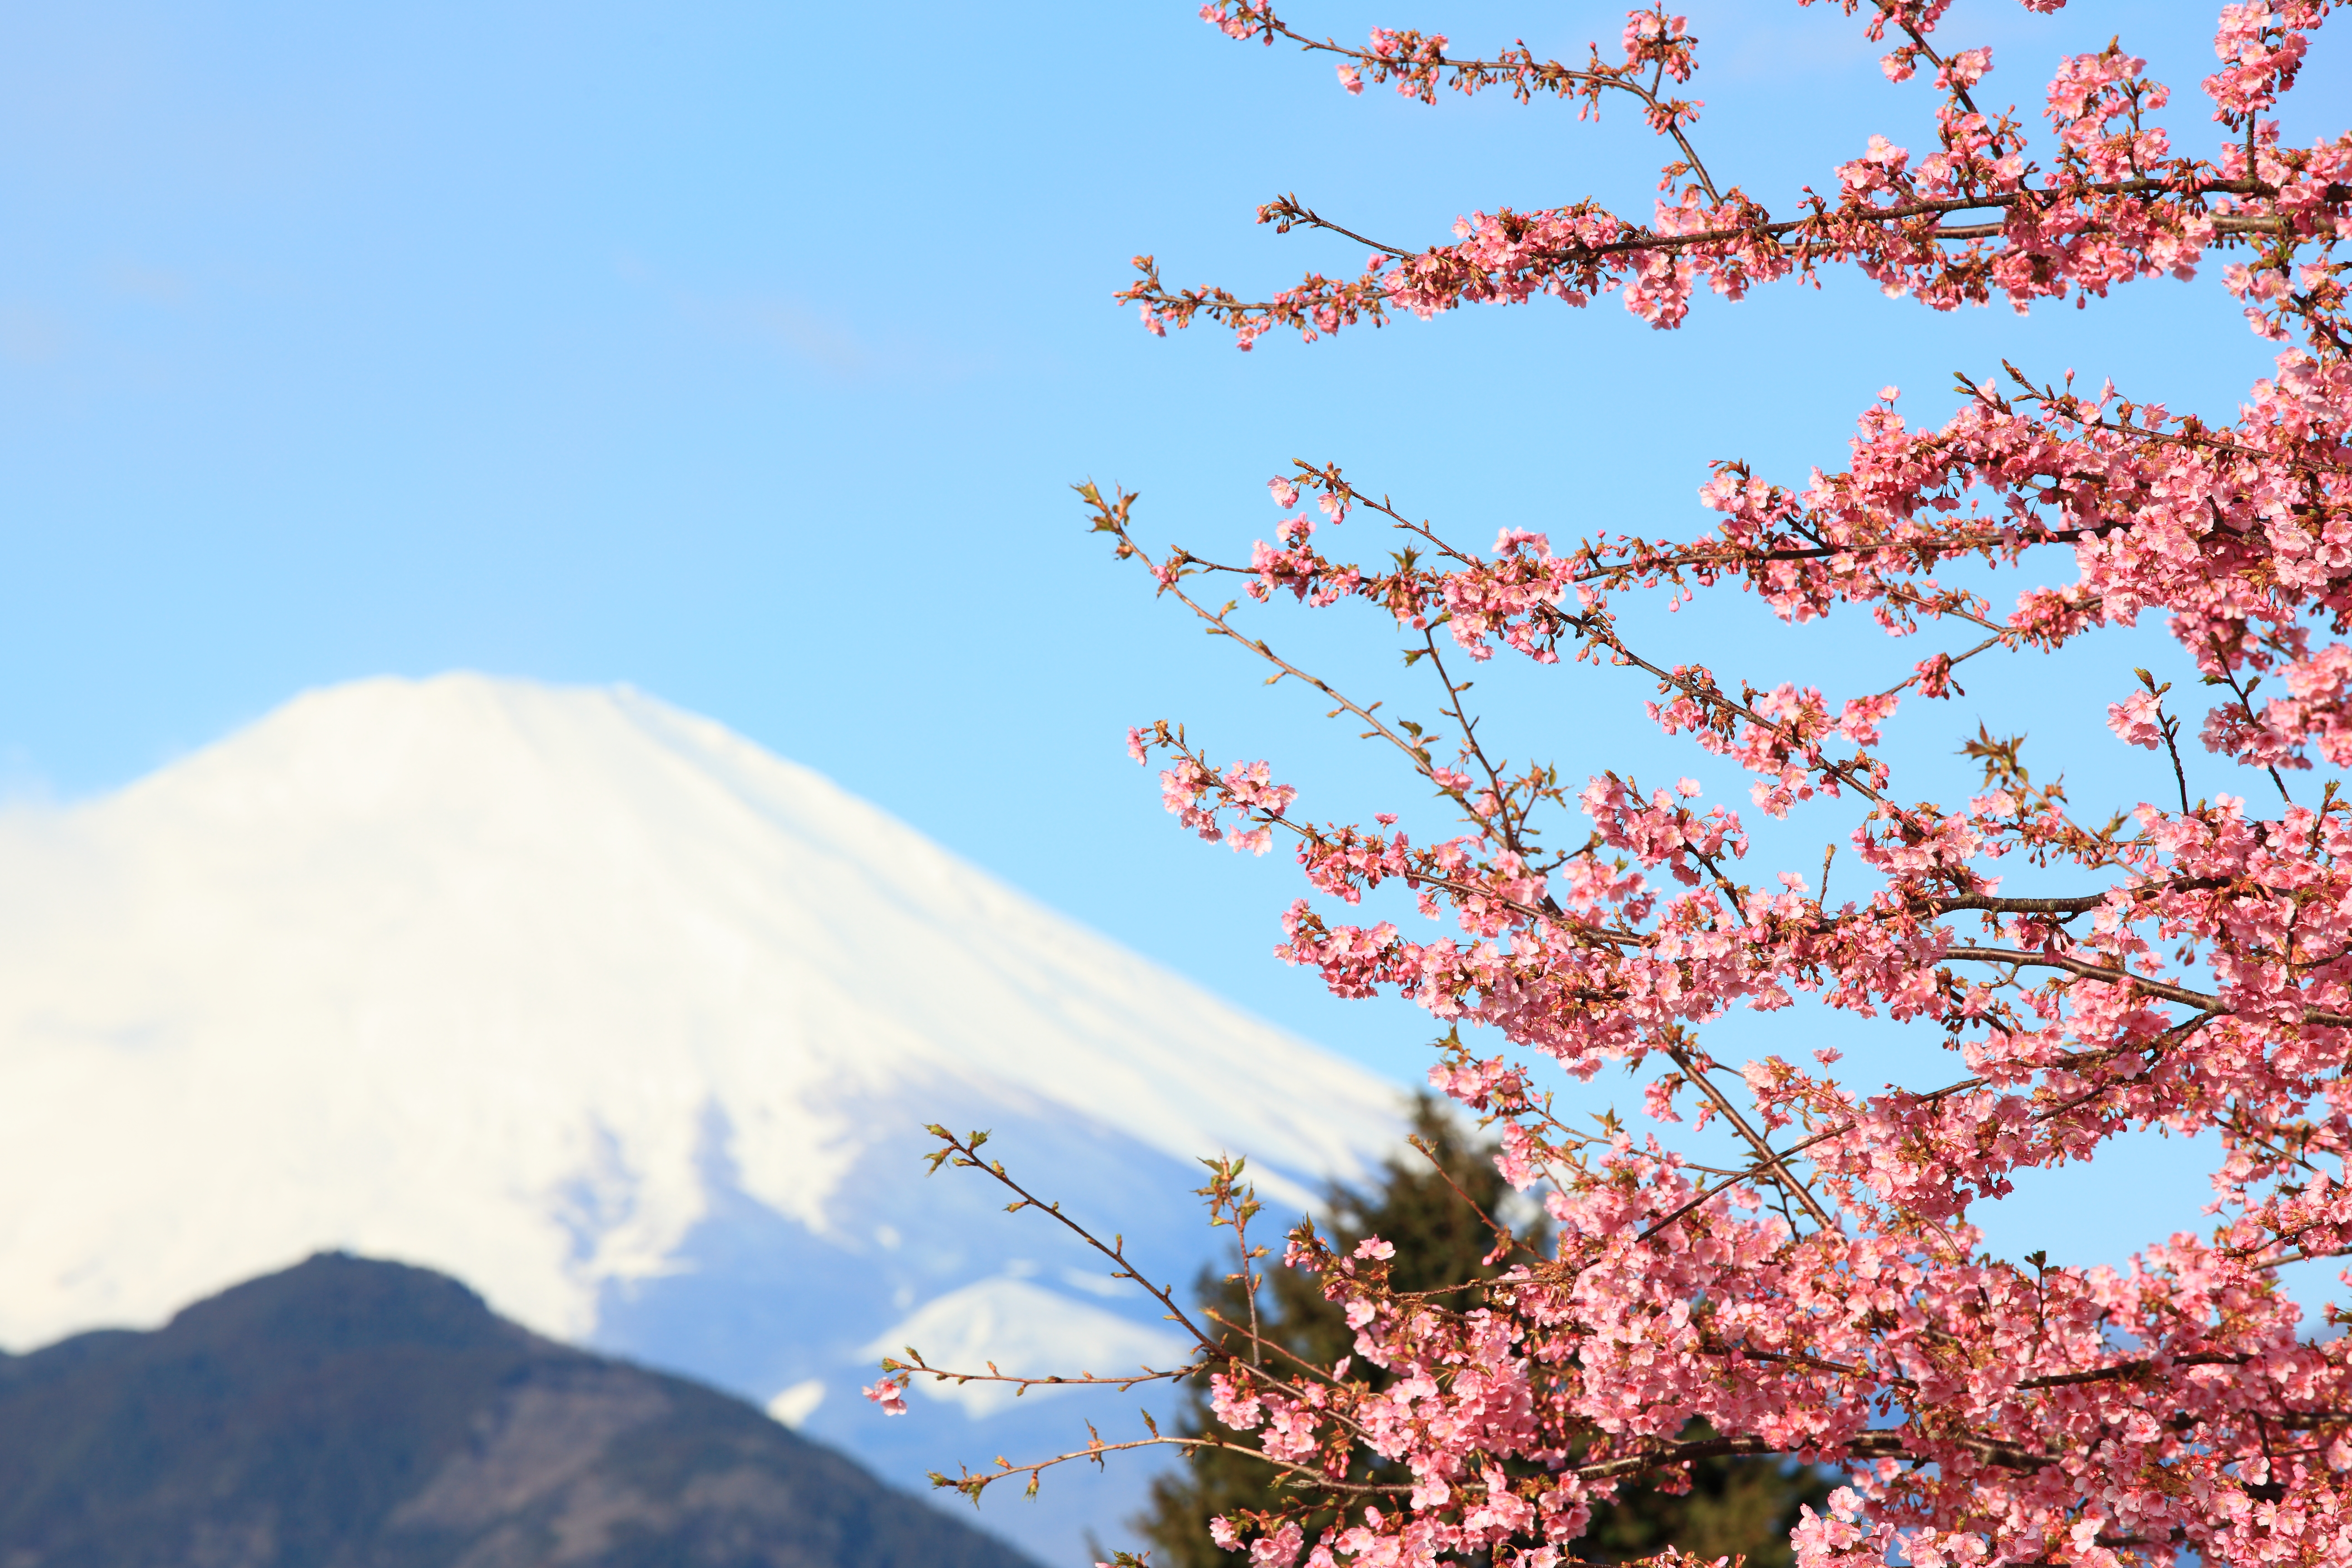 File:Sakura and Mt. Fuji 桜(さくら)と富士山(ふじさん).jpg - Wikipedia